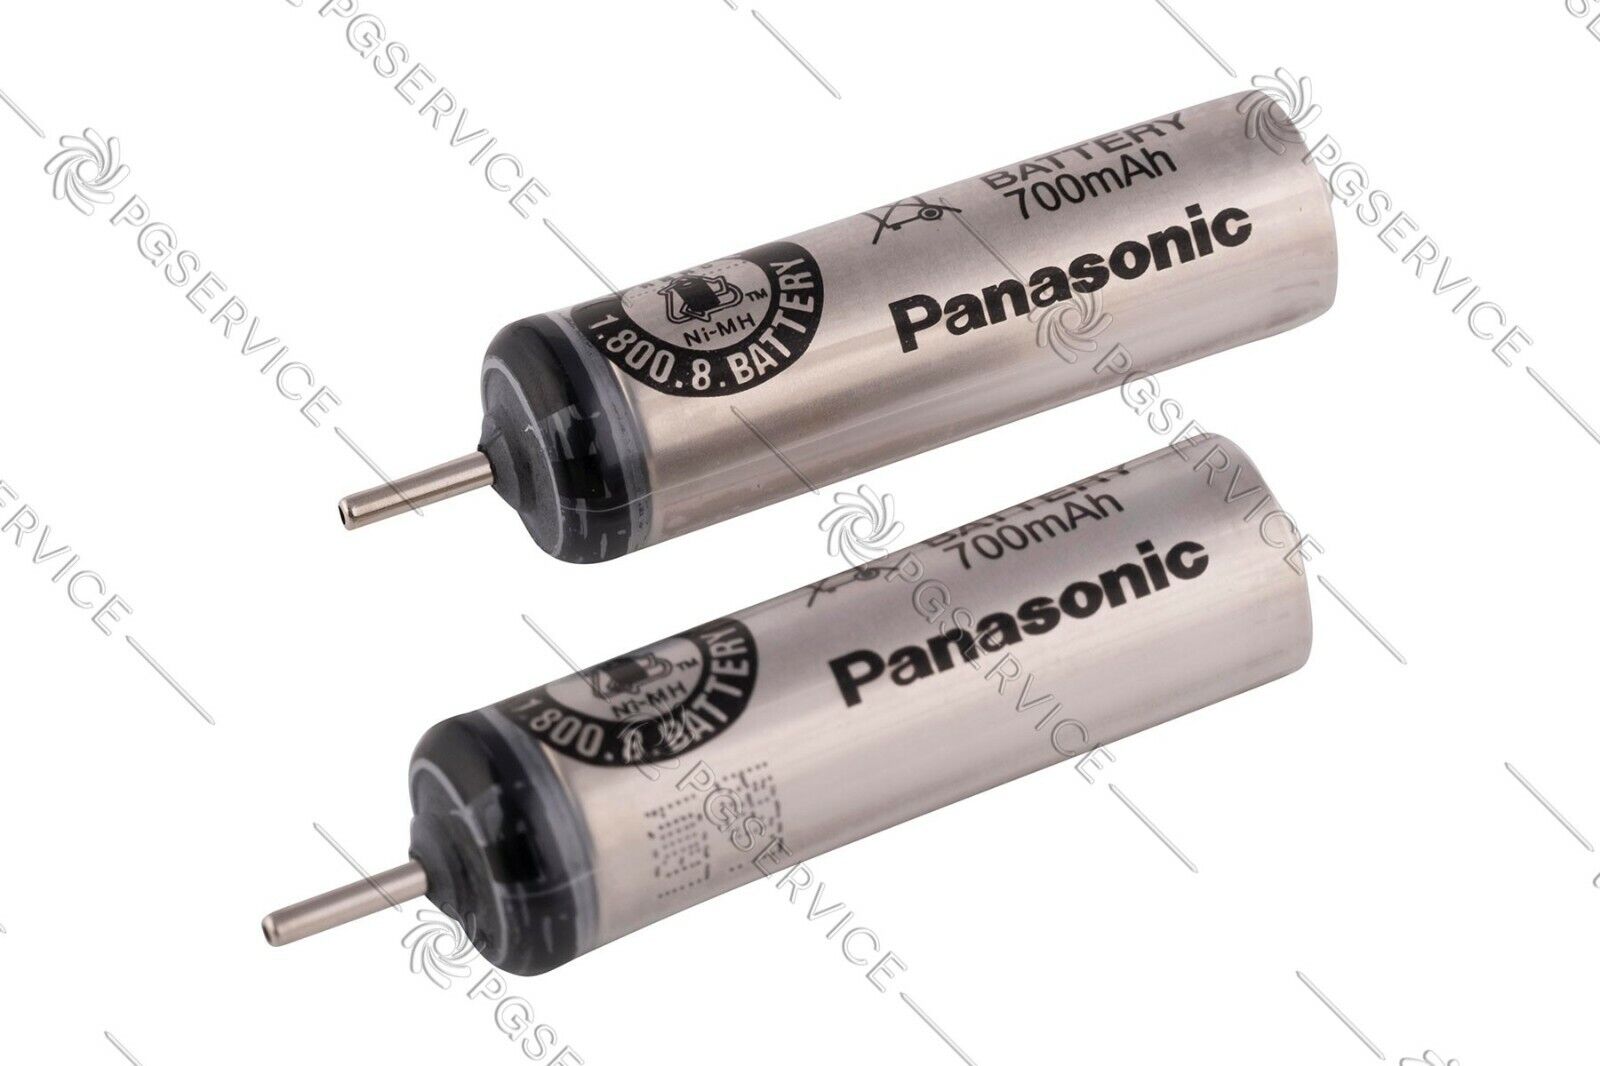 Panasonic 2x batterie 700mAh 61mm rasoio ER-CA35 ES-7109 ES-RL21 ES-RT51 ES-RT81